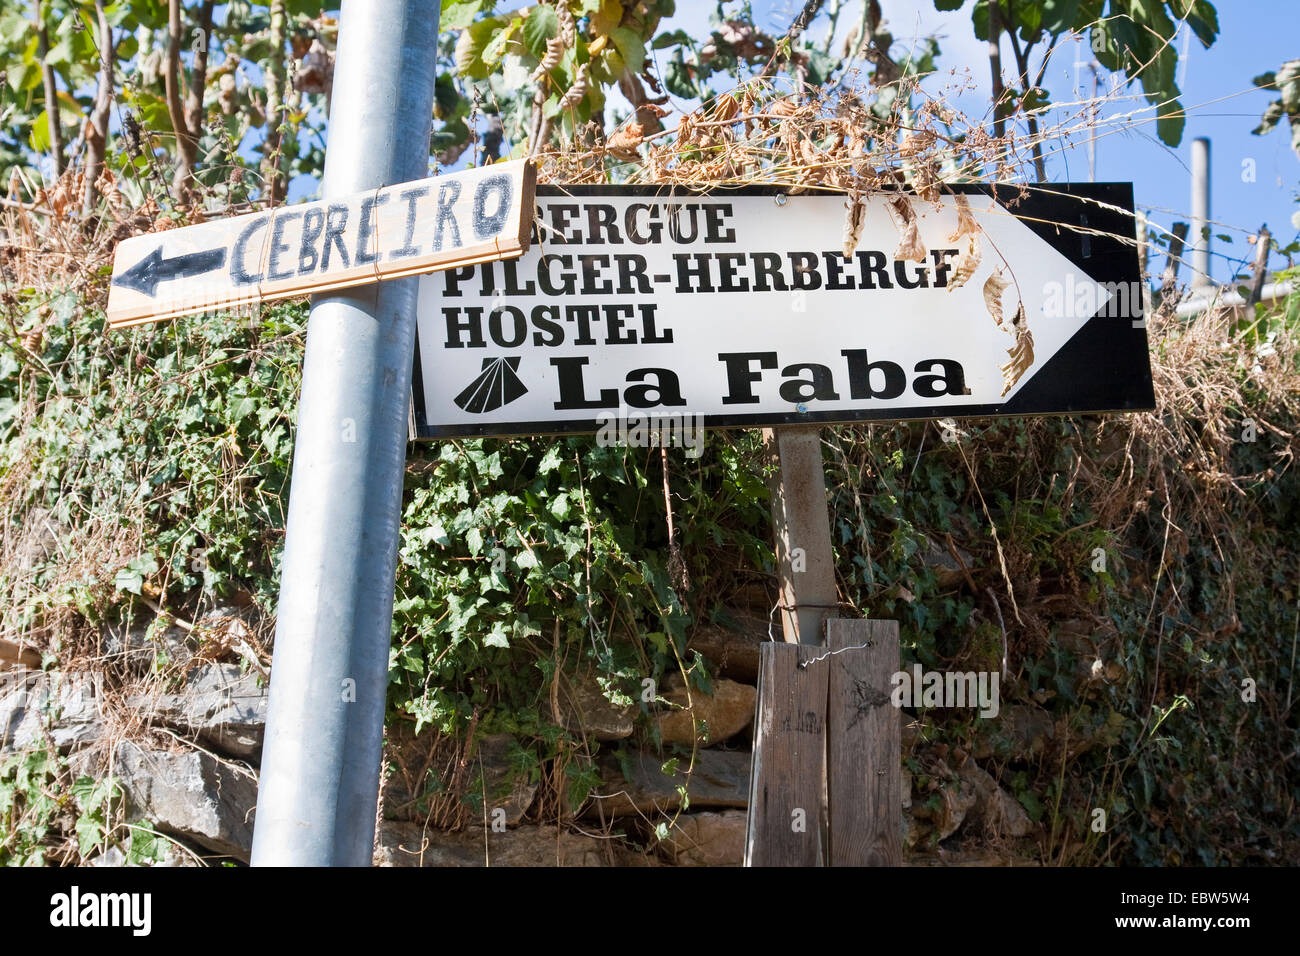 direction sign to Cebreiro, Spain, Leon, Kastilien, La Faba Stock Photo